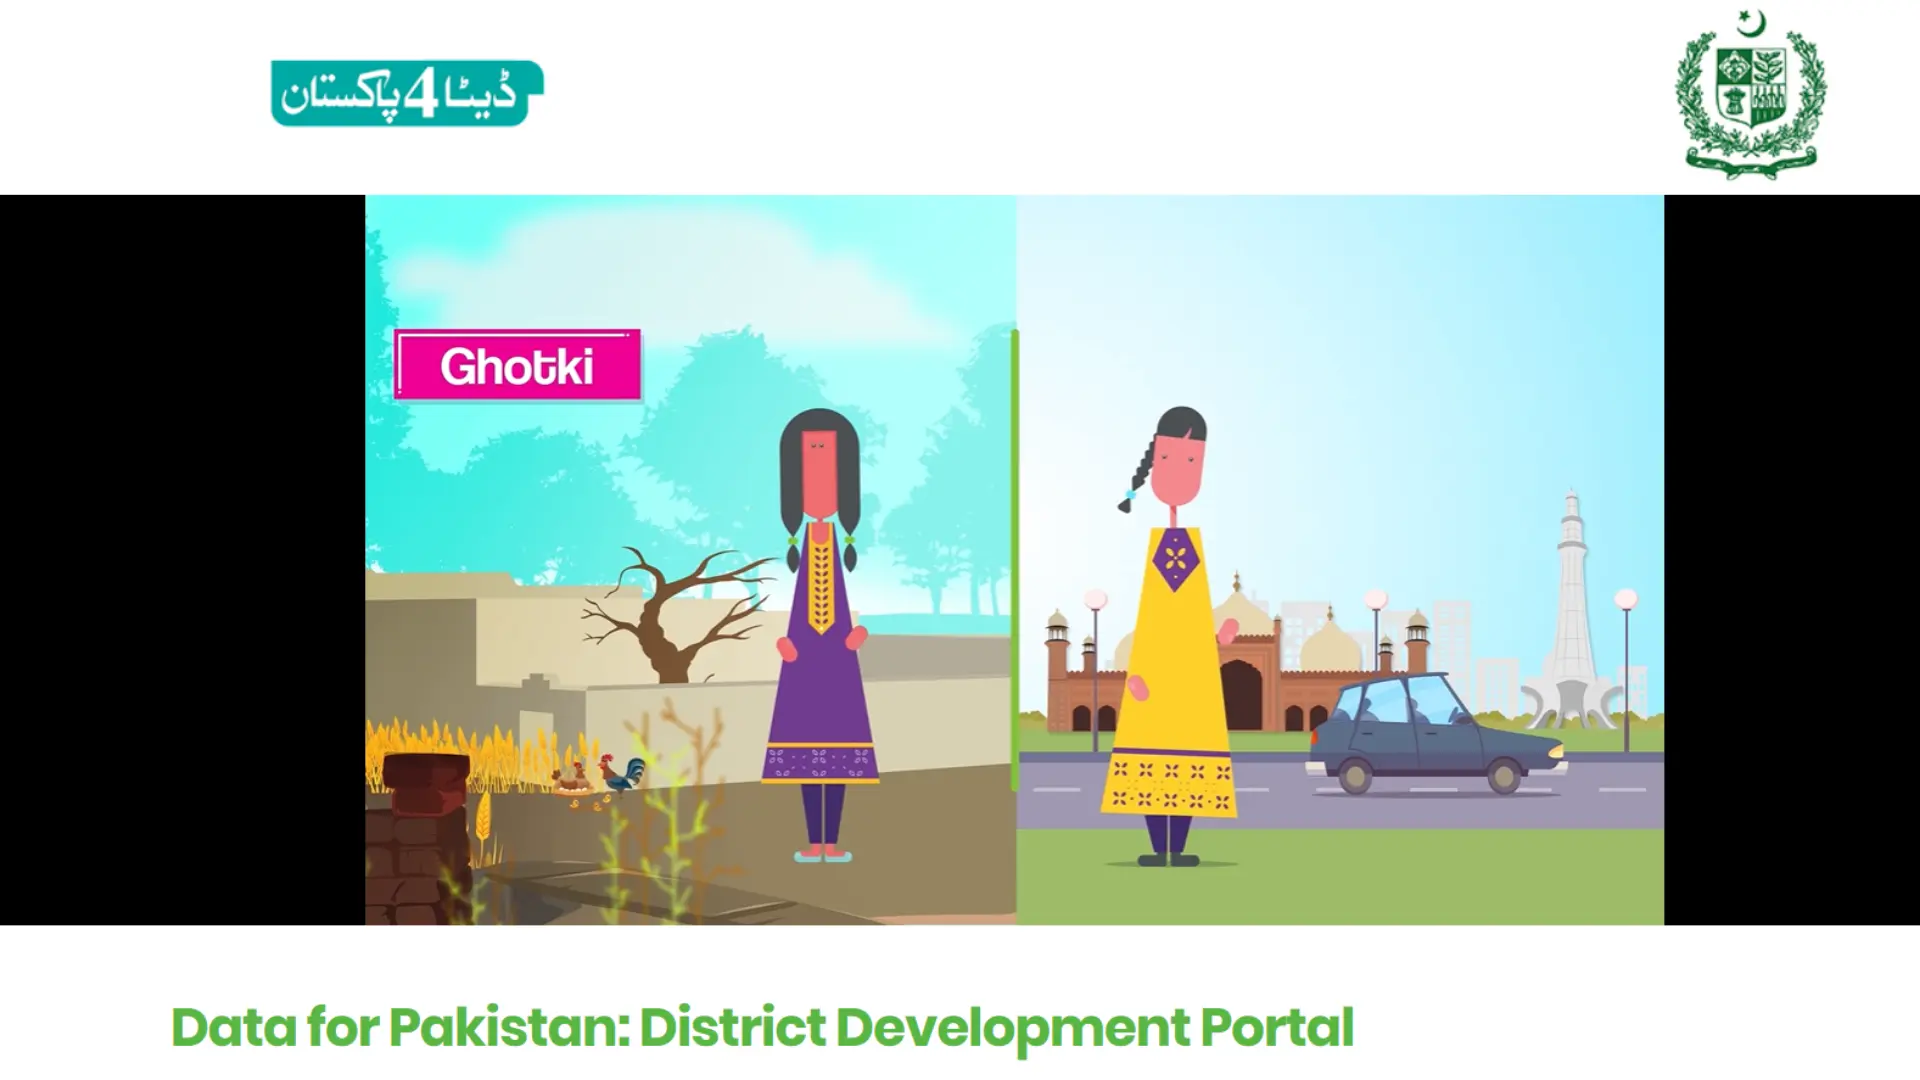 District Development Portal of Ehsaas Program